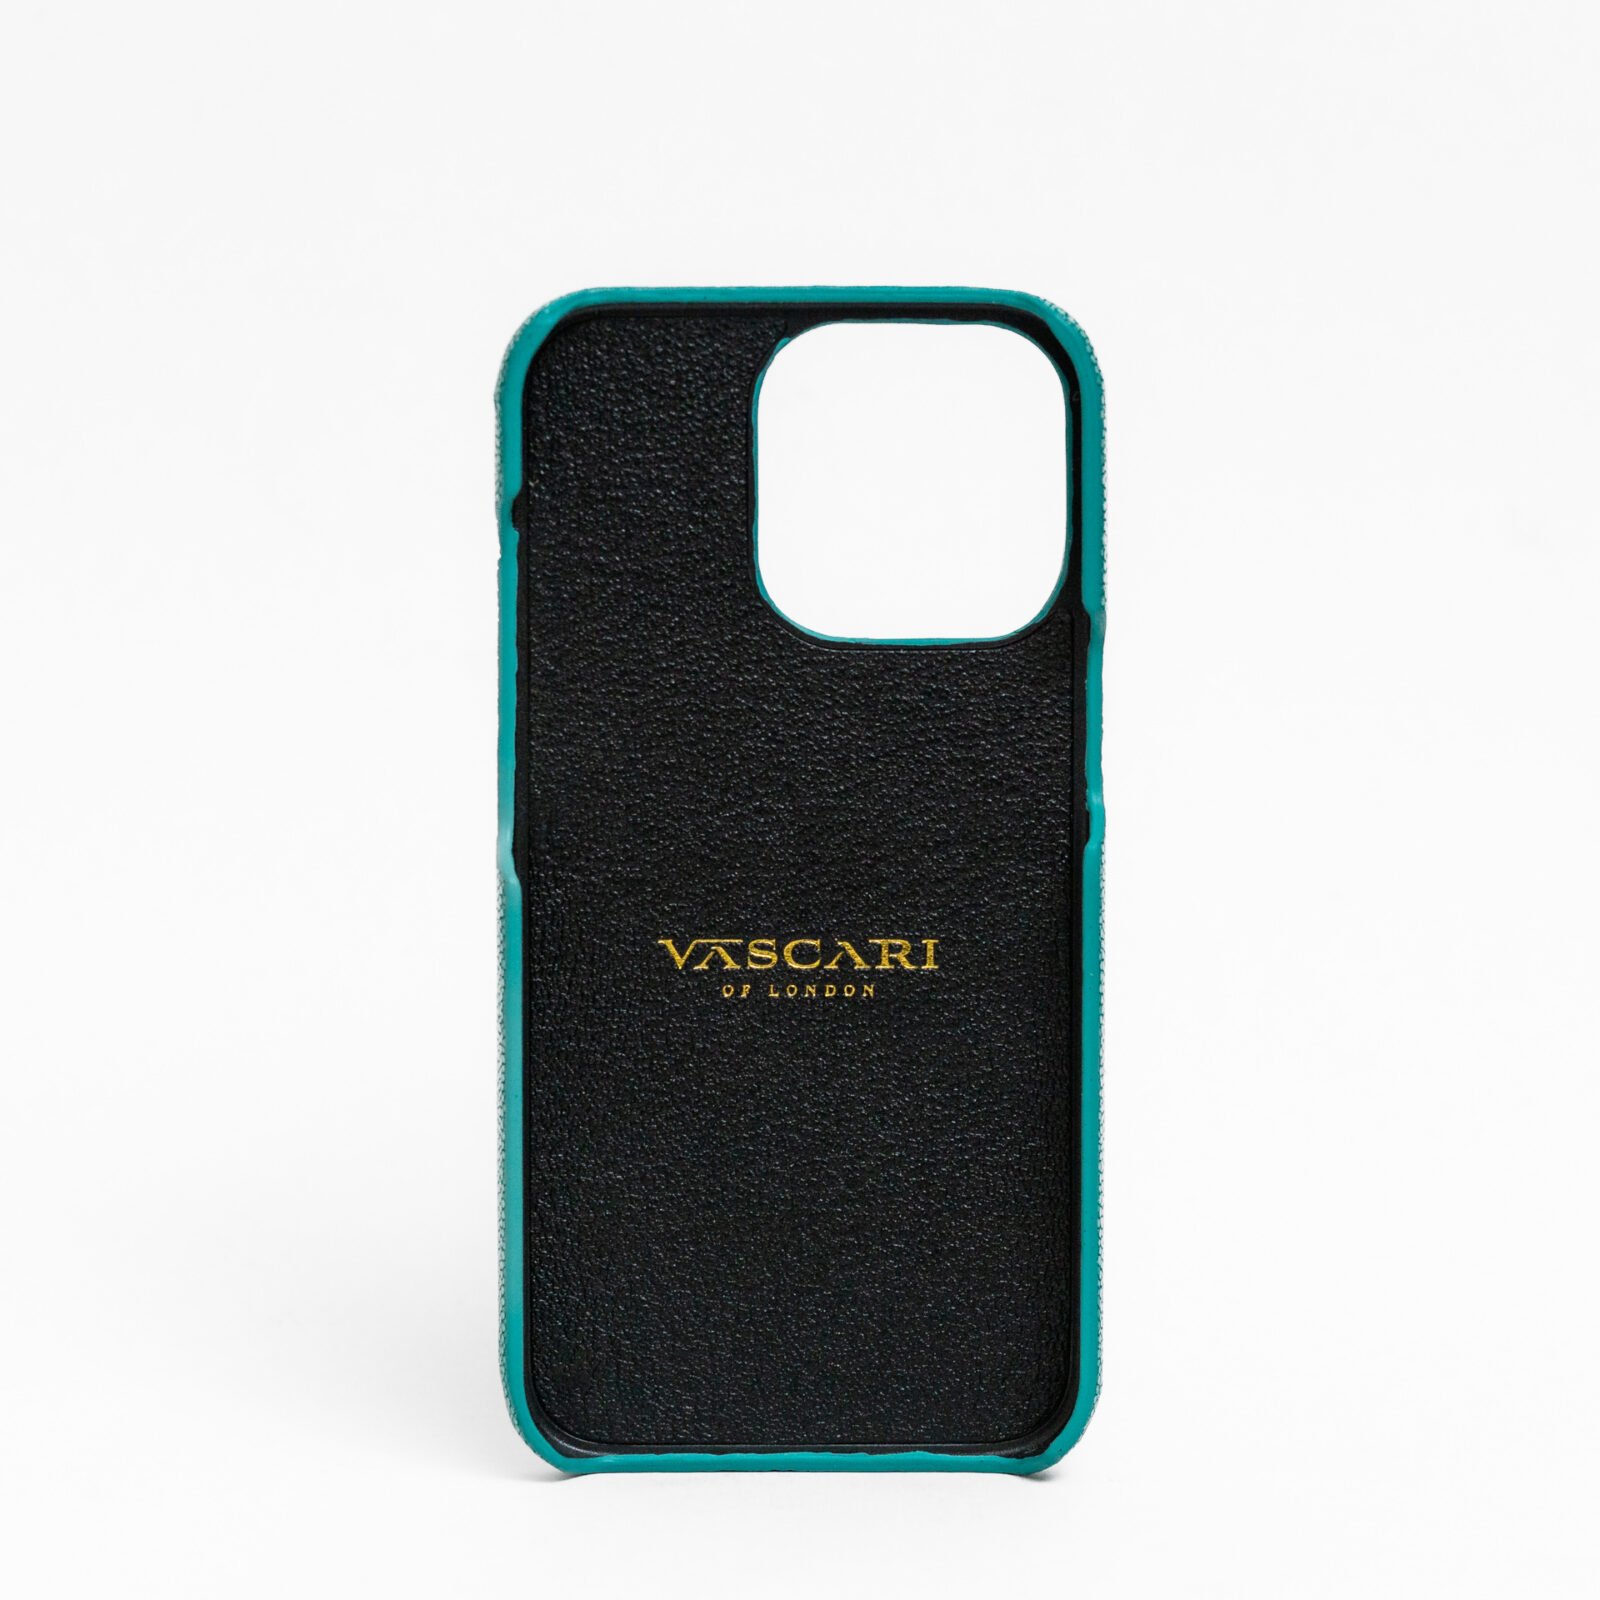 Vascari Turquoise Stingray finger holder Leather Case